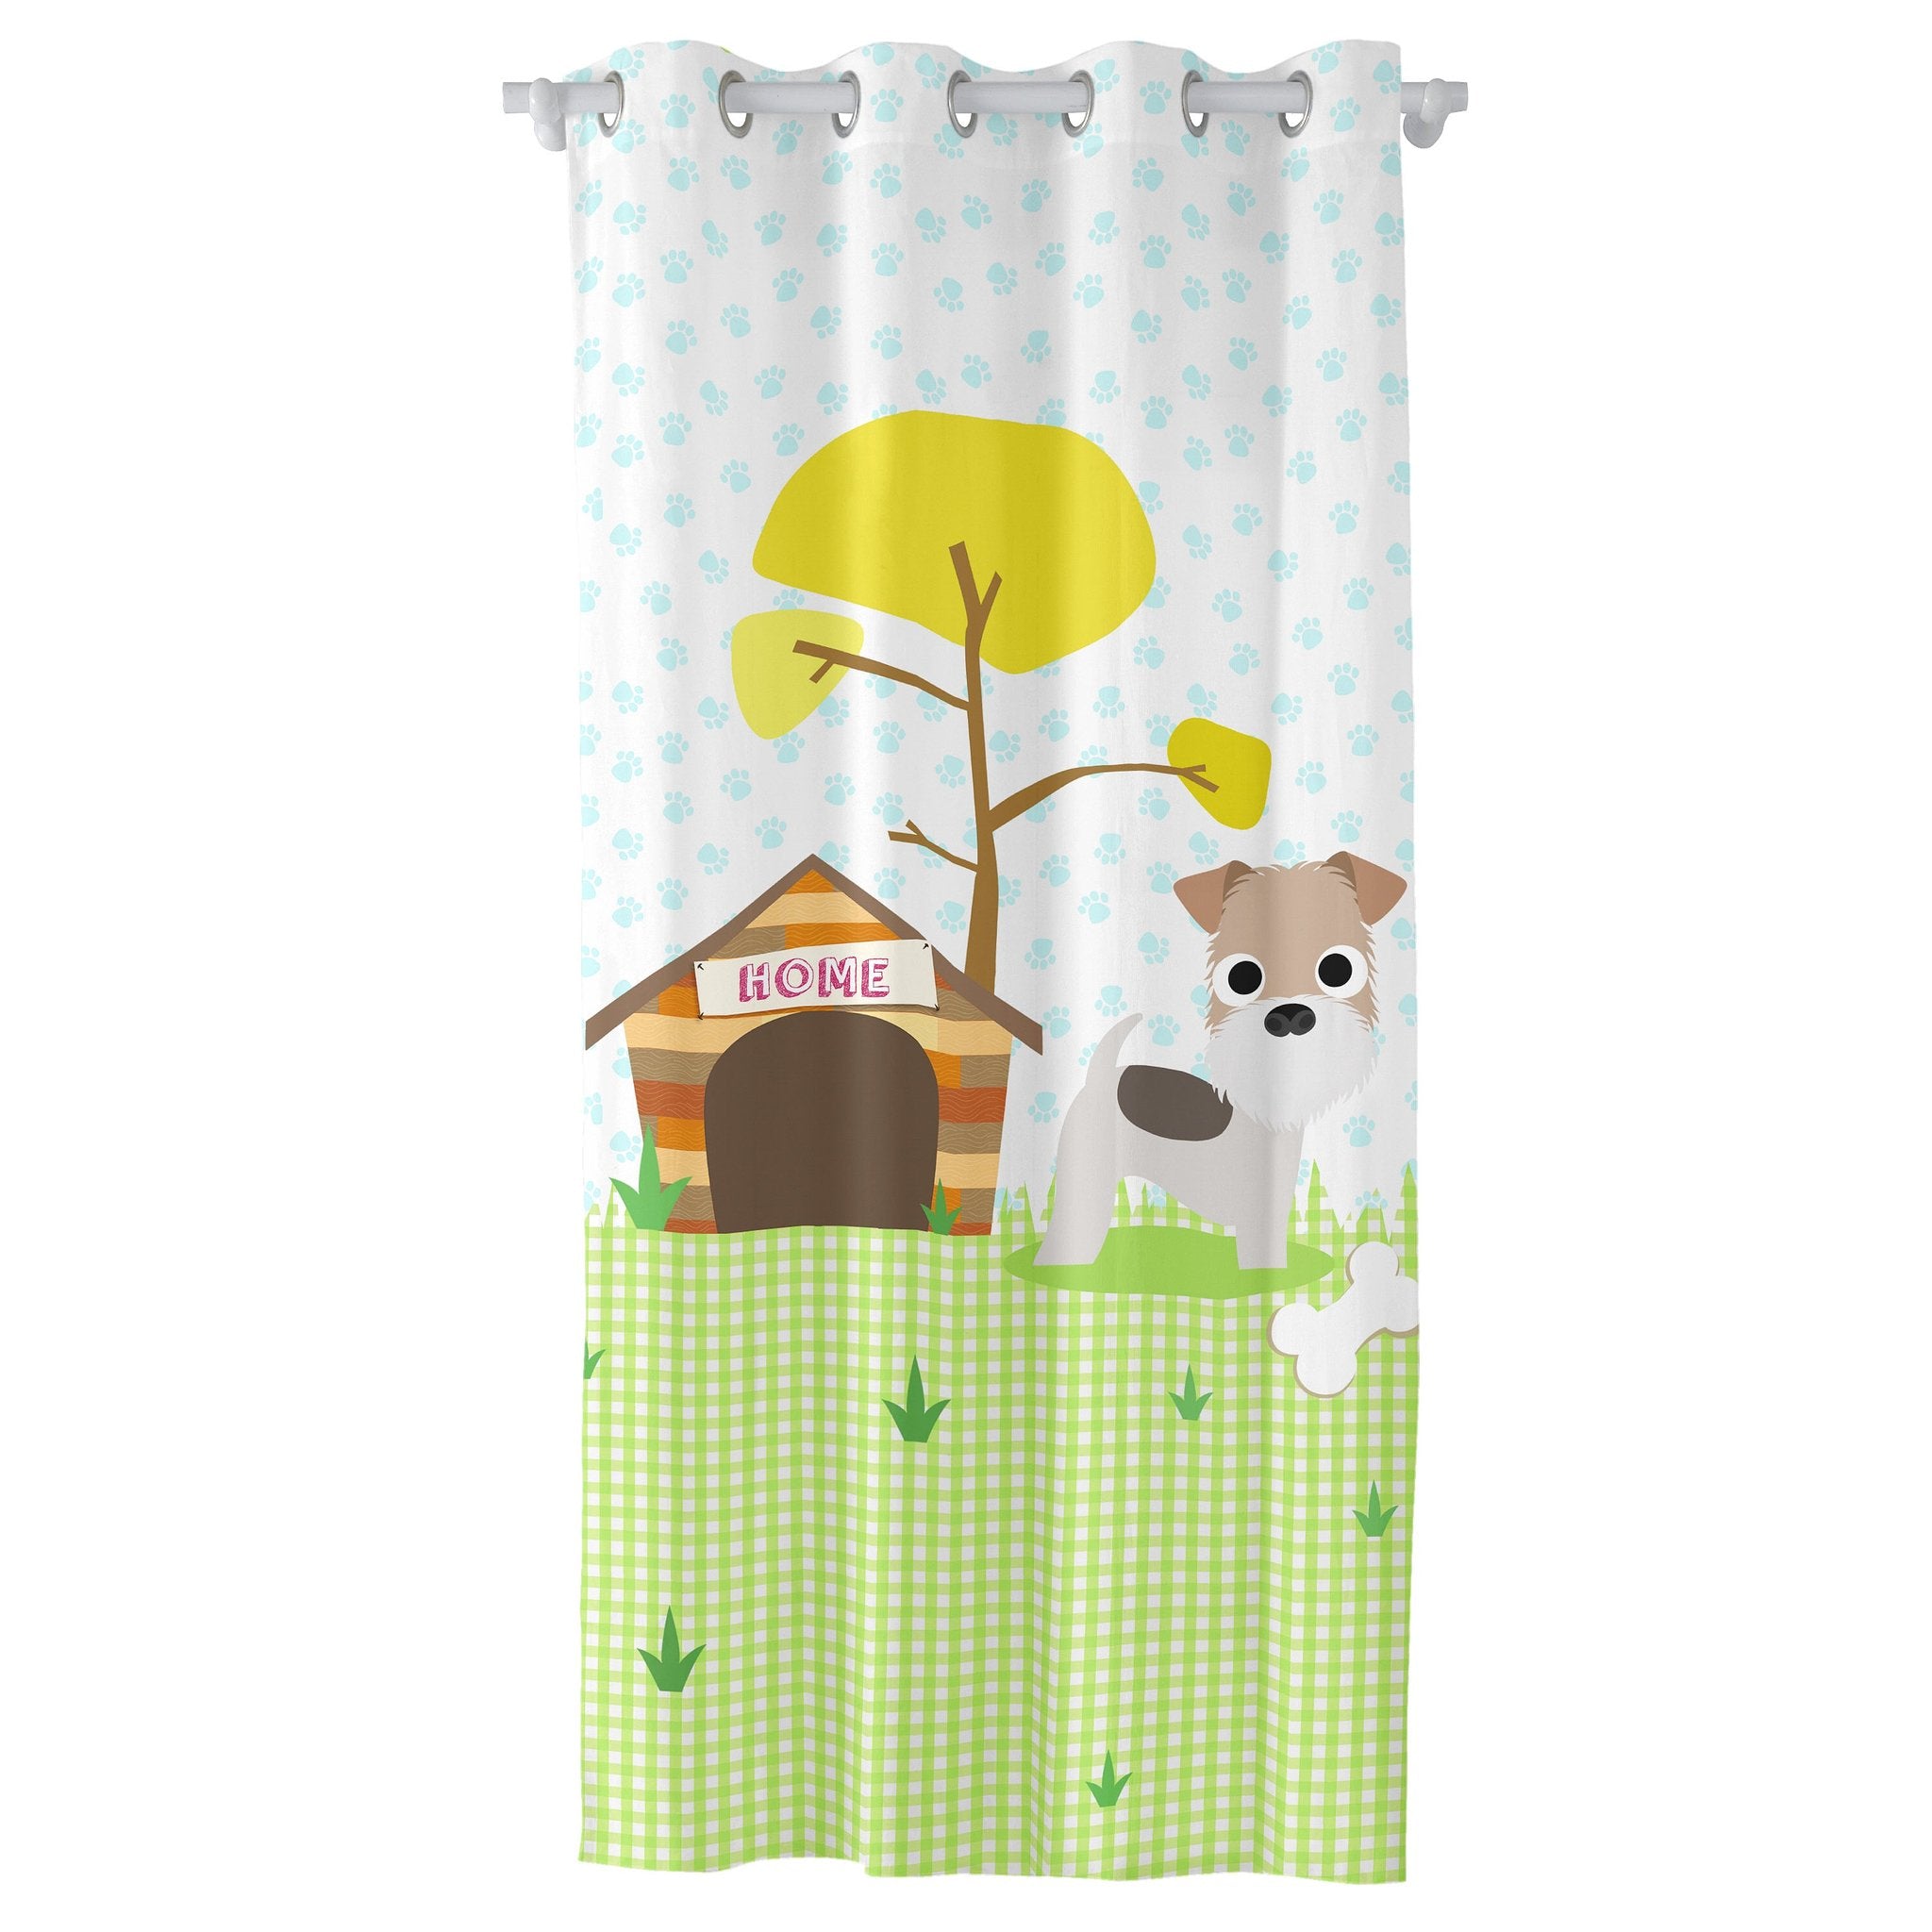 Happy Friday Curtain Dogs 140x265 cm Multicolor